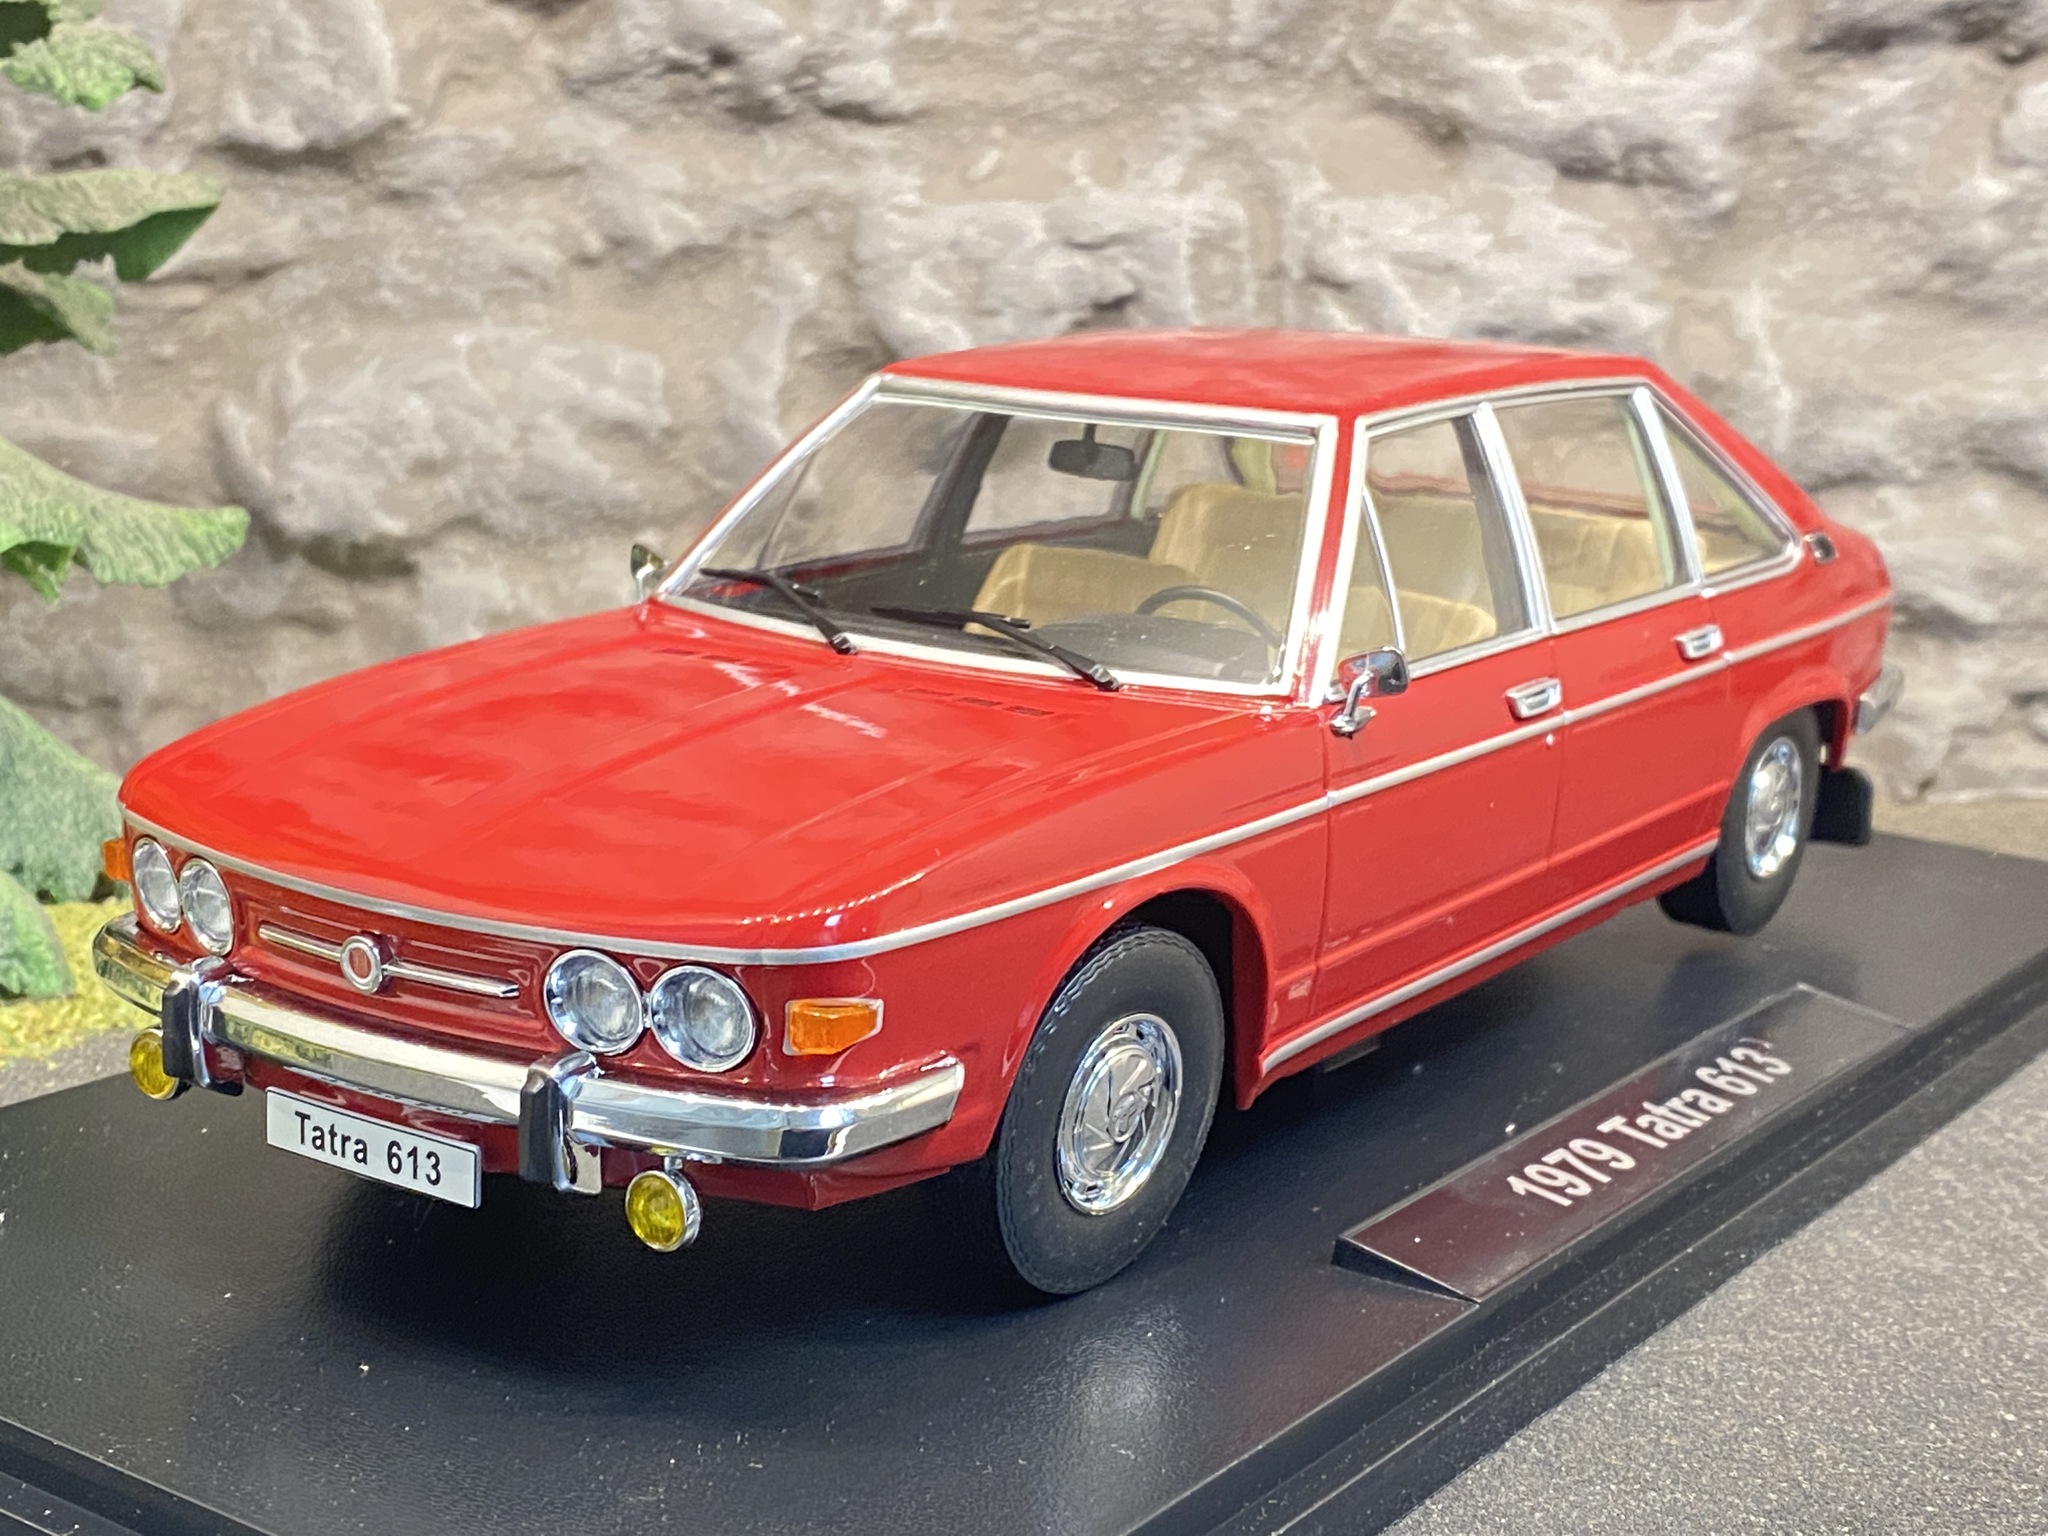 Skala 1/18 Tatra 613 1979' Röd från Triple9 Collection